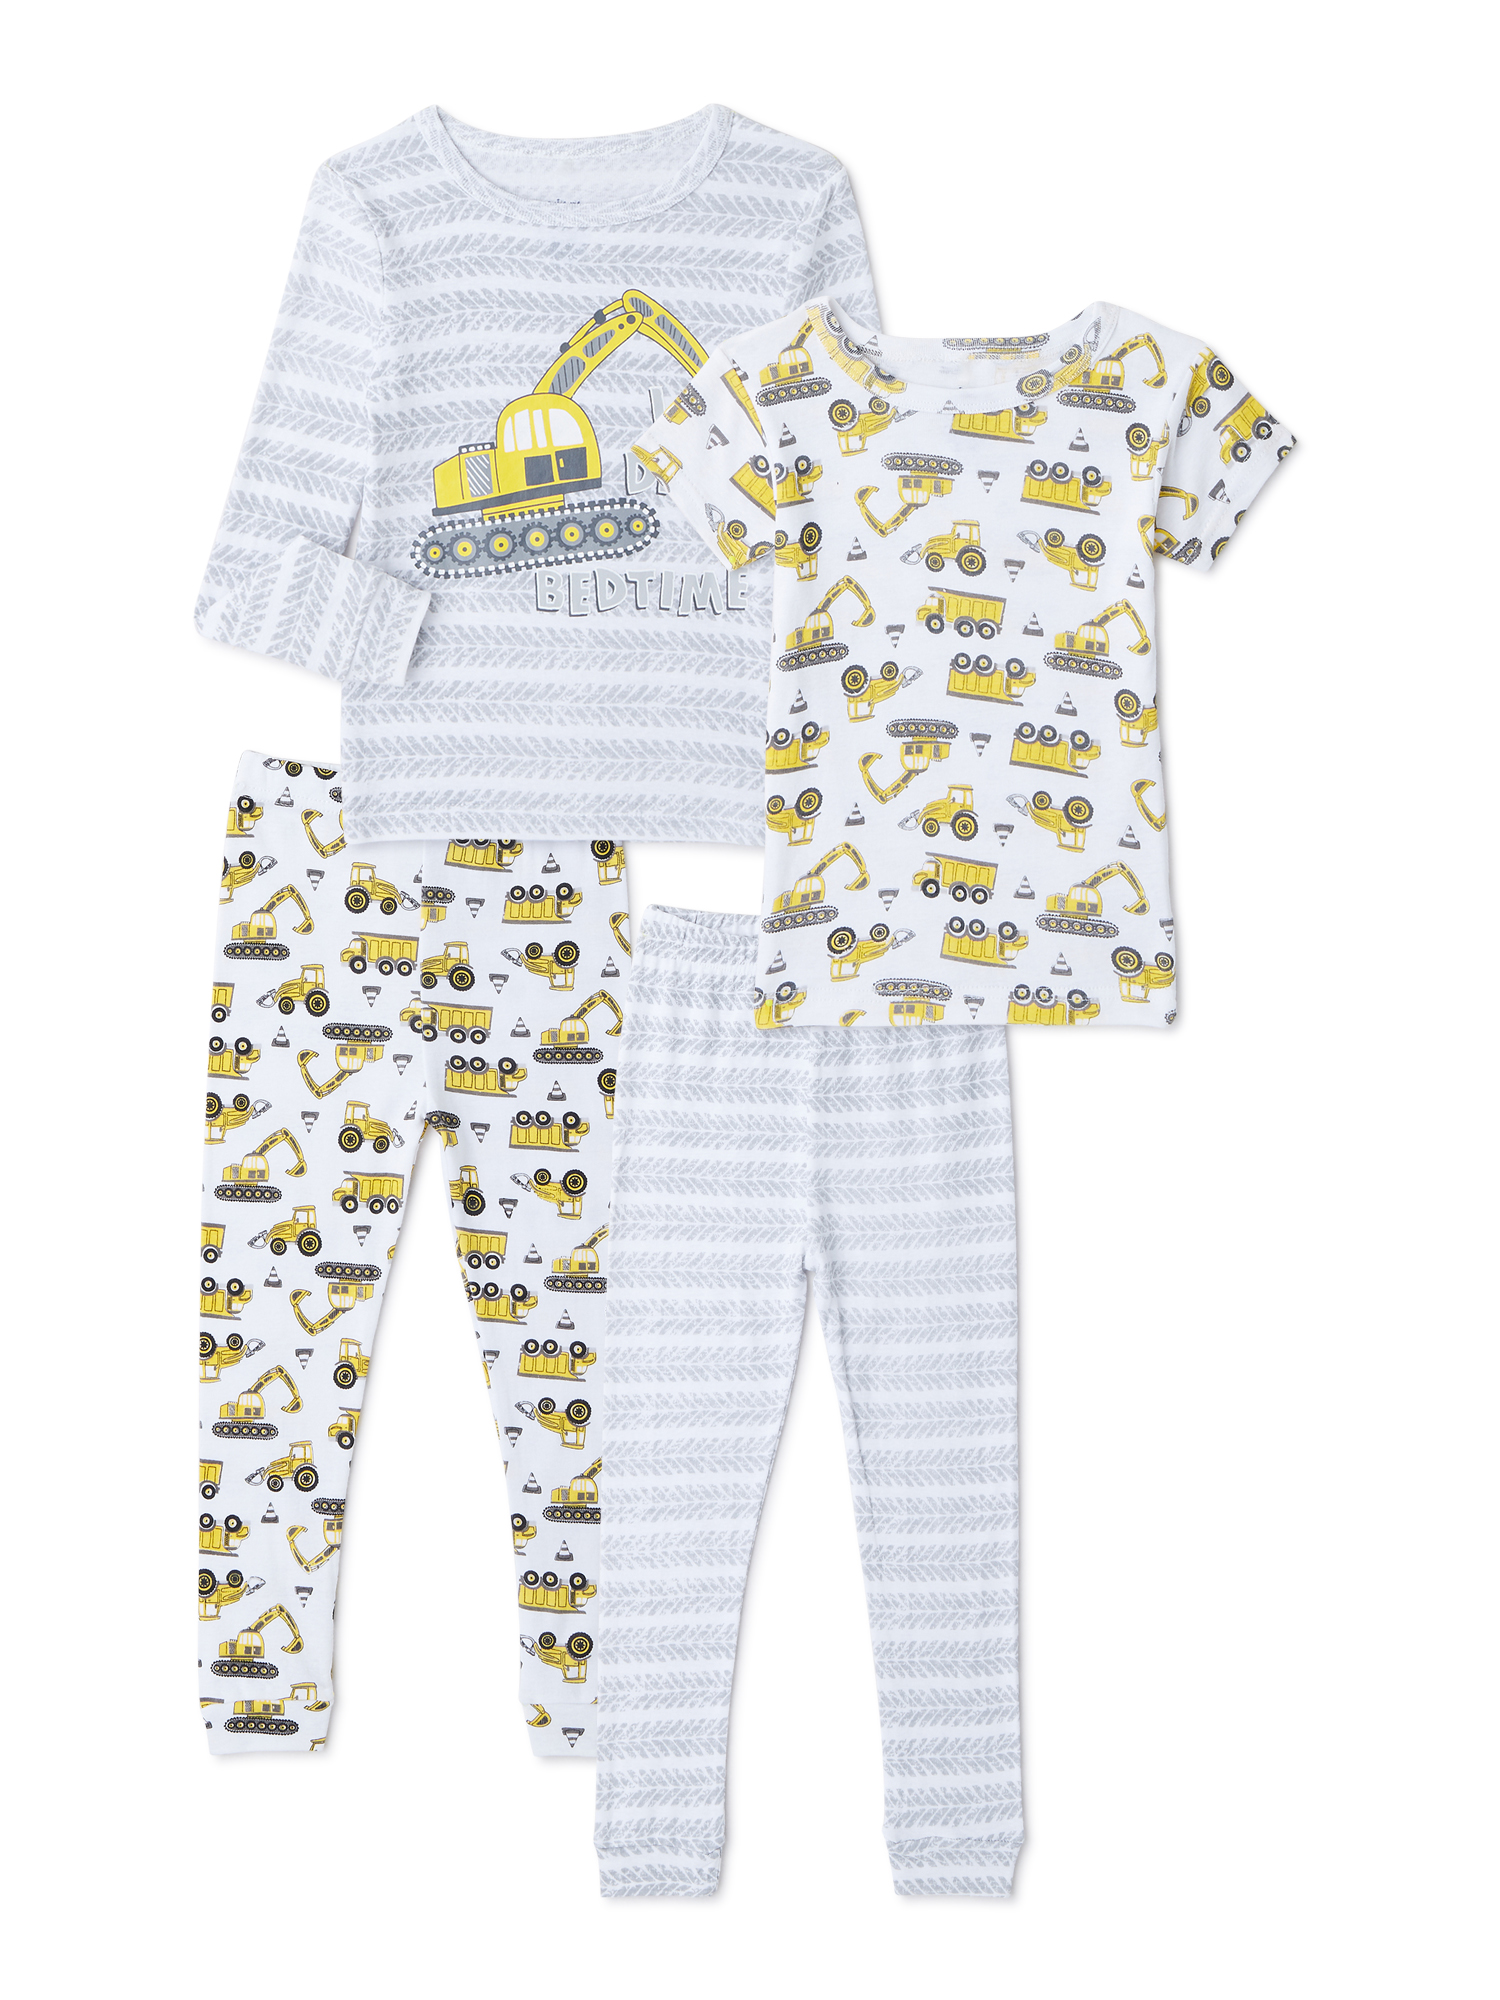 Cutie Pie Baby Toddler Boys Short & Long Sleeve Snug Fit Cotton Pajamas Set, 4-Piece, Size 12 Months-5T - image 1 of 4